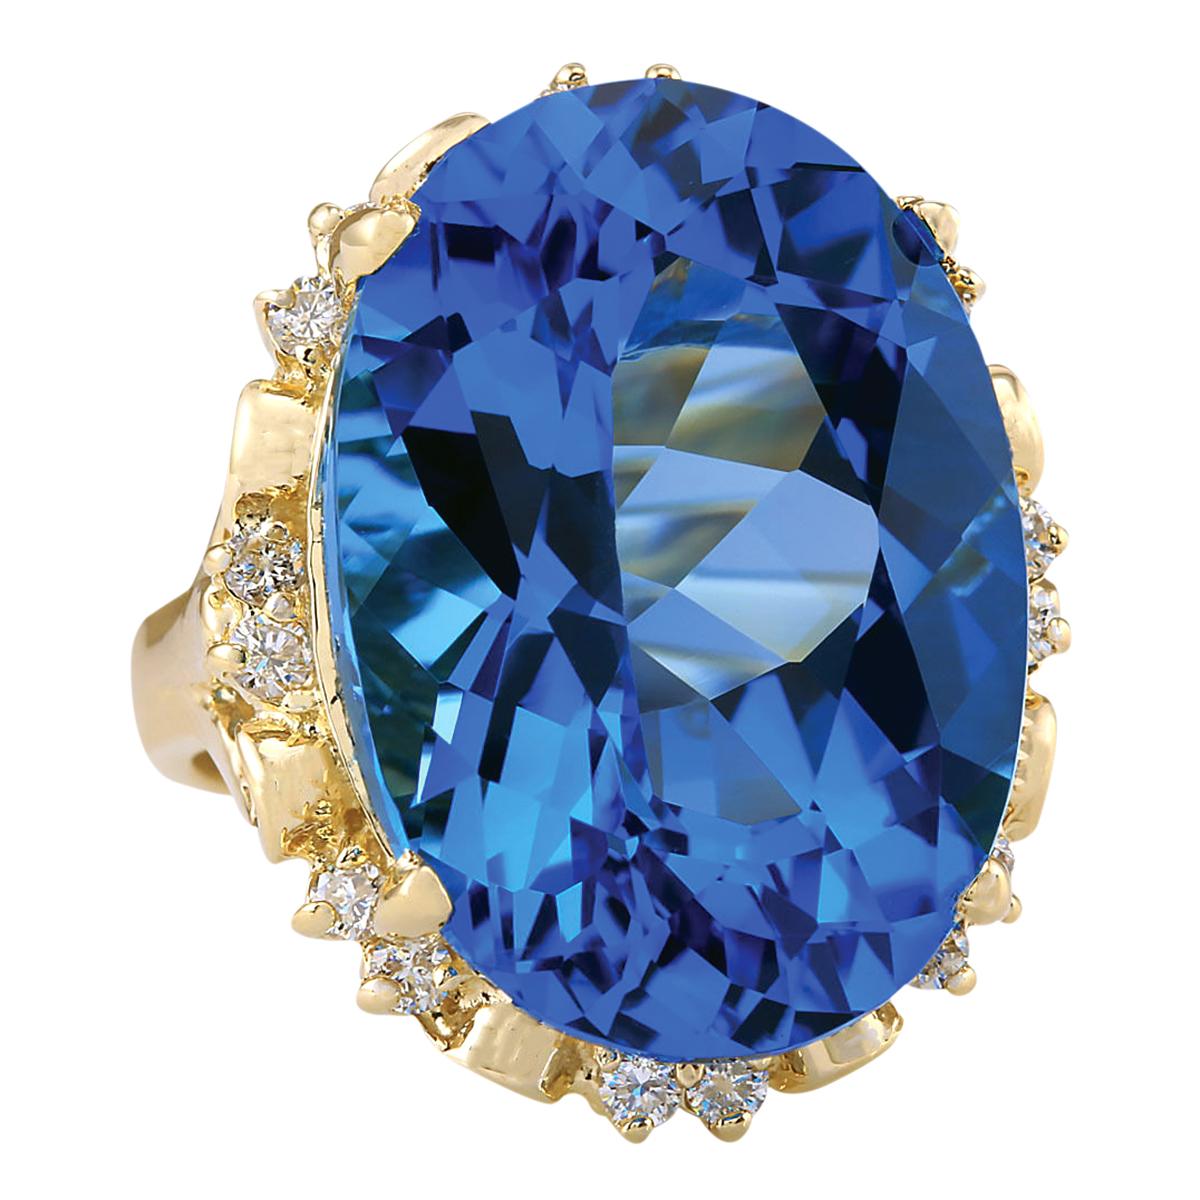 30.50 Carat Natural Topaz 14 Karat Yellow Gold Diamond Ring
Stamped: 14K Yellow Gold
Total Ring Weight: 15.0 Grams
Total Natural Topaz Weight is 30.00 Carat (Measures: 22.00x16.00 mm)
Color: Blue
Diamond Weight: Total Natural Diamond Weight is 0.50